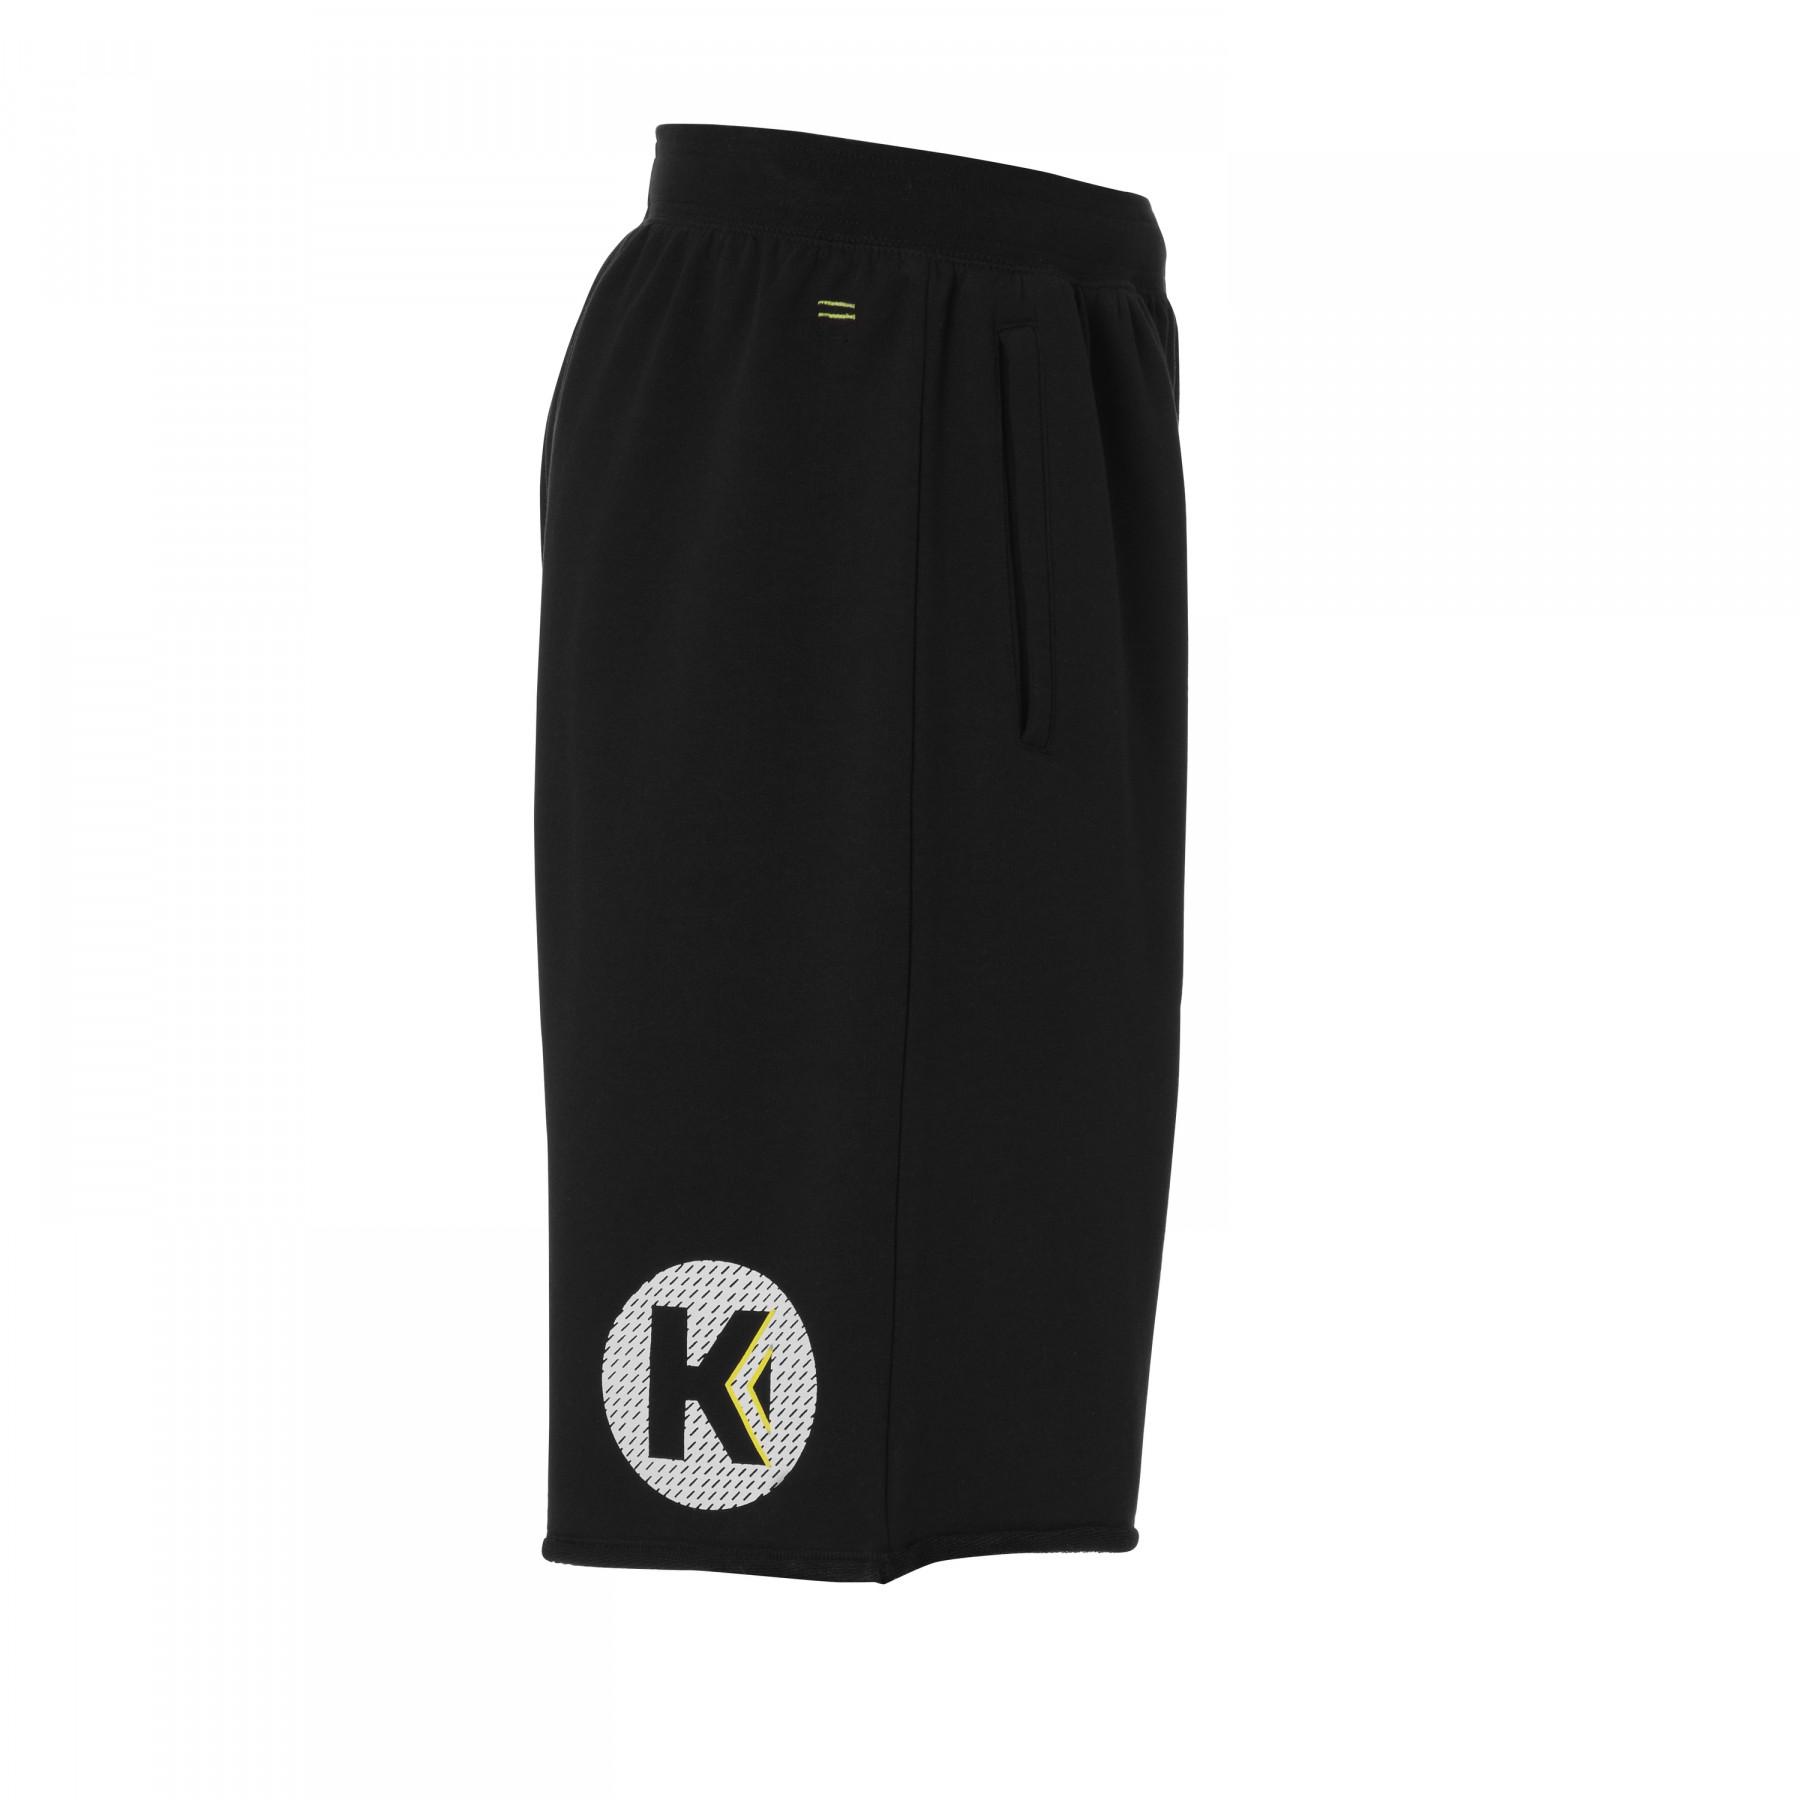 Pantalón corto niños Kempa Core 2.0 Sweat